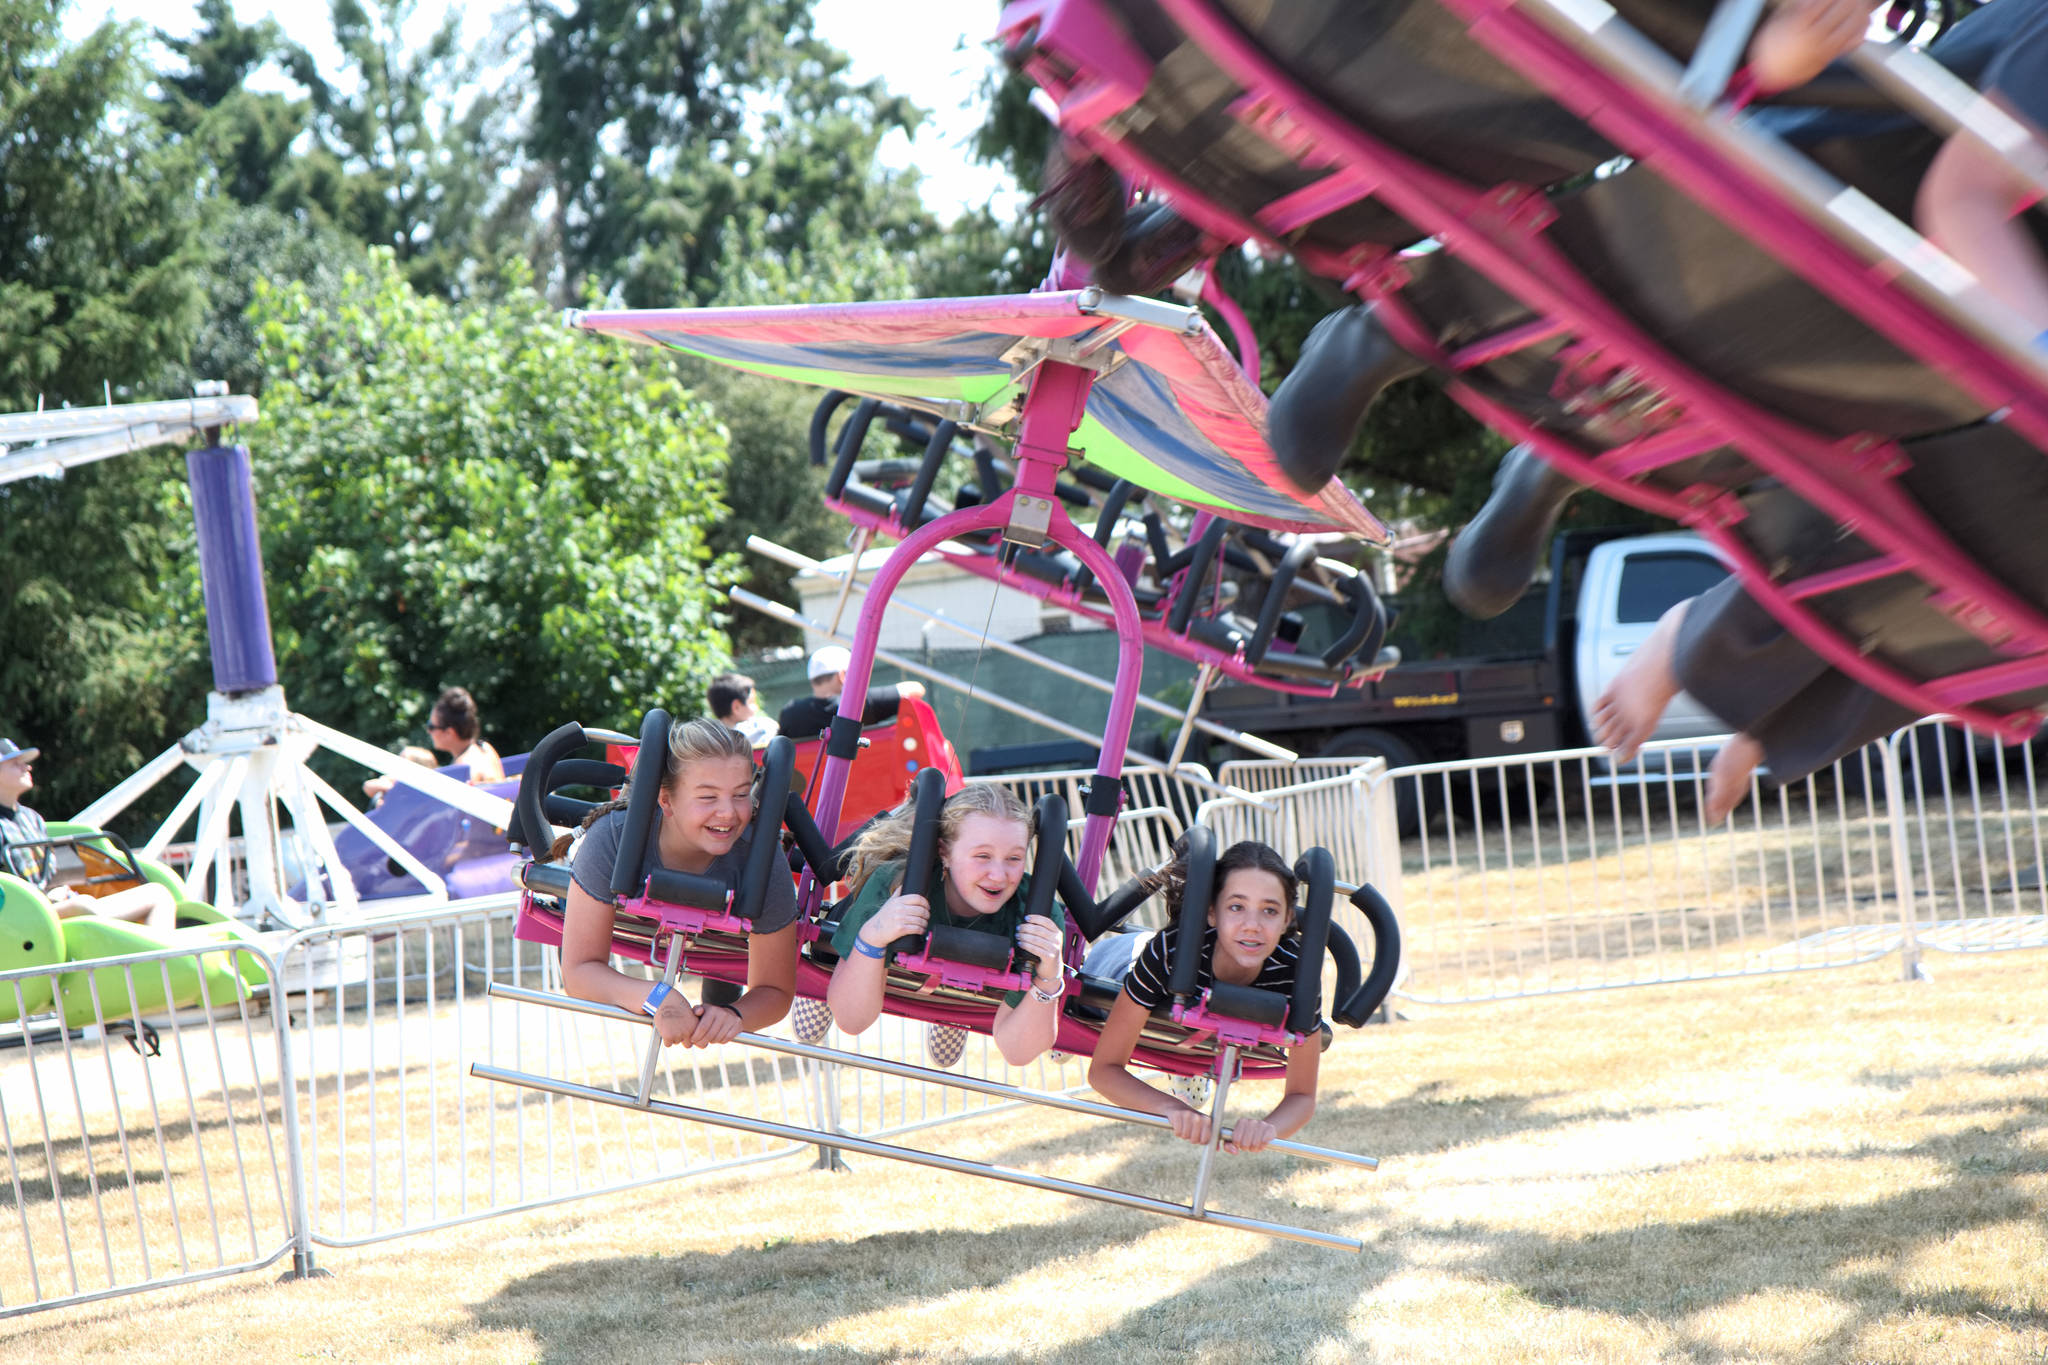 RYAN SPARKS | THE DAILY WORLD Fair patrons enjoy a trip on the Wind Glider ride at the Grays Harbor County Fair on Thursday in Elma.